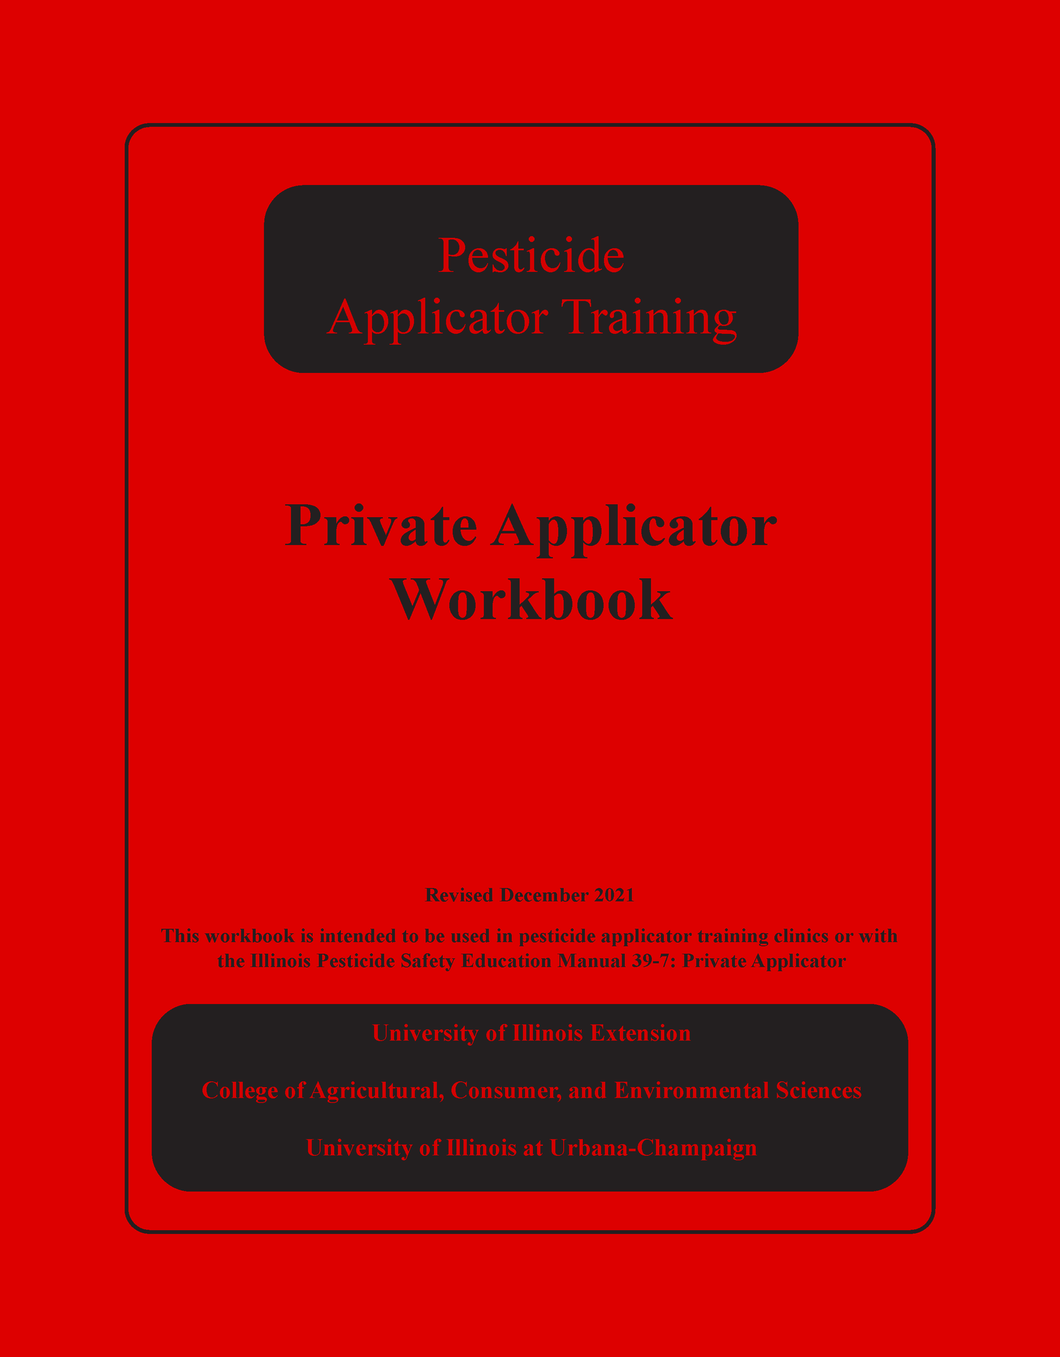 SP39-7W - Pesticide Applicator Training: Private Applicator Workbook